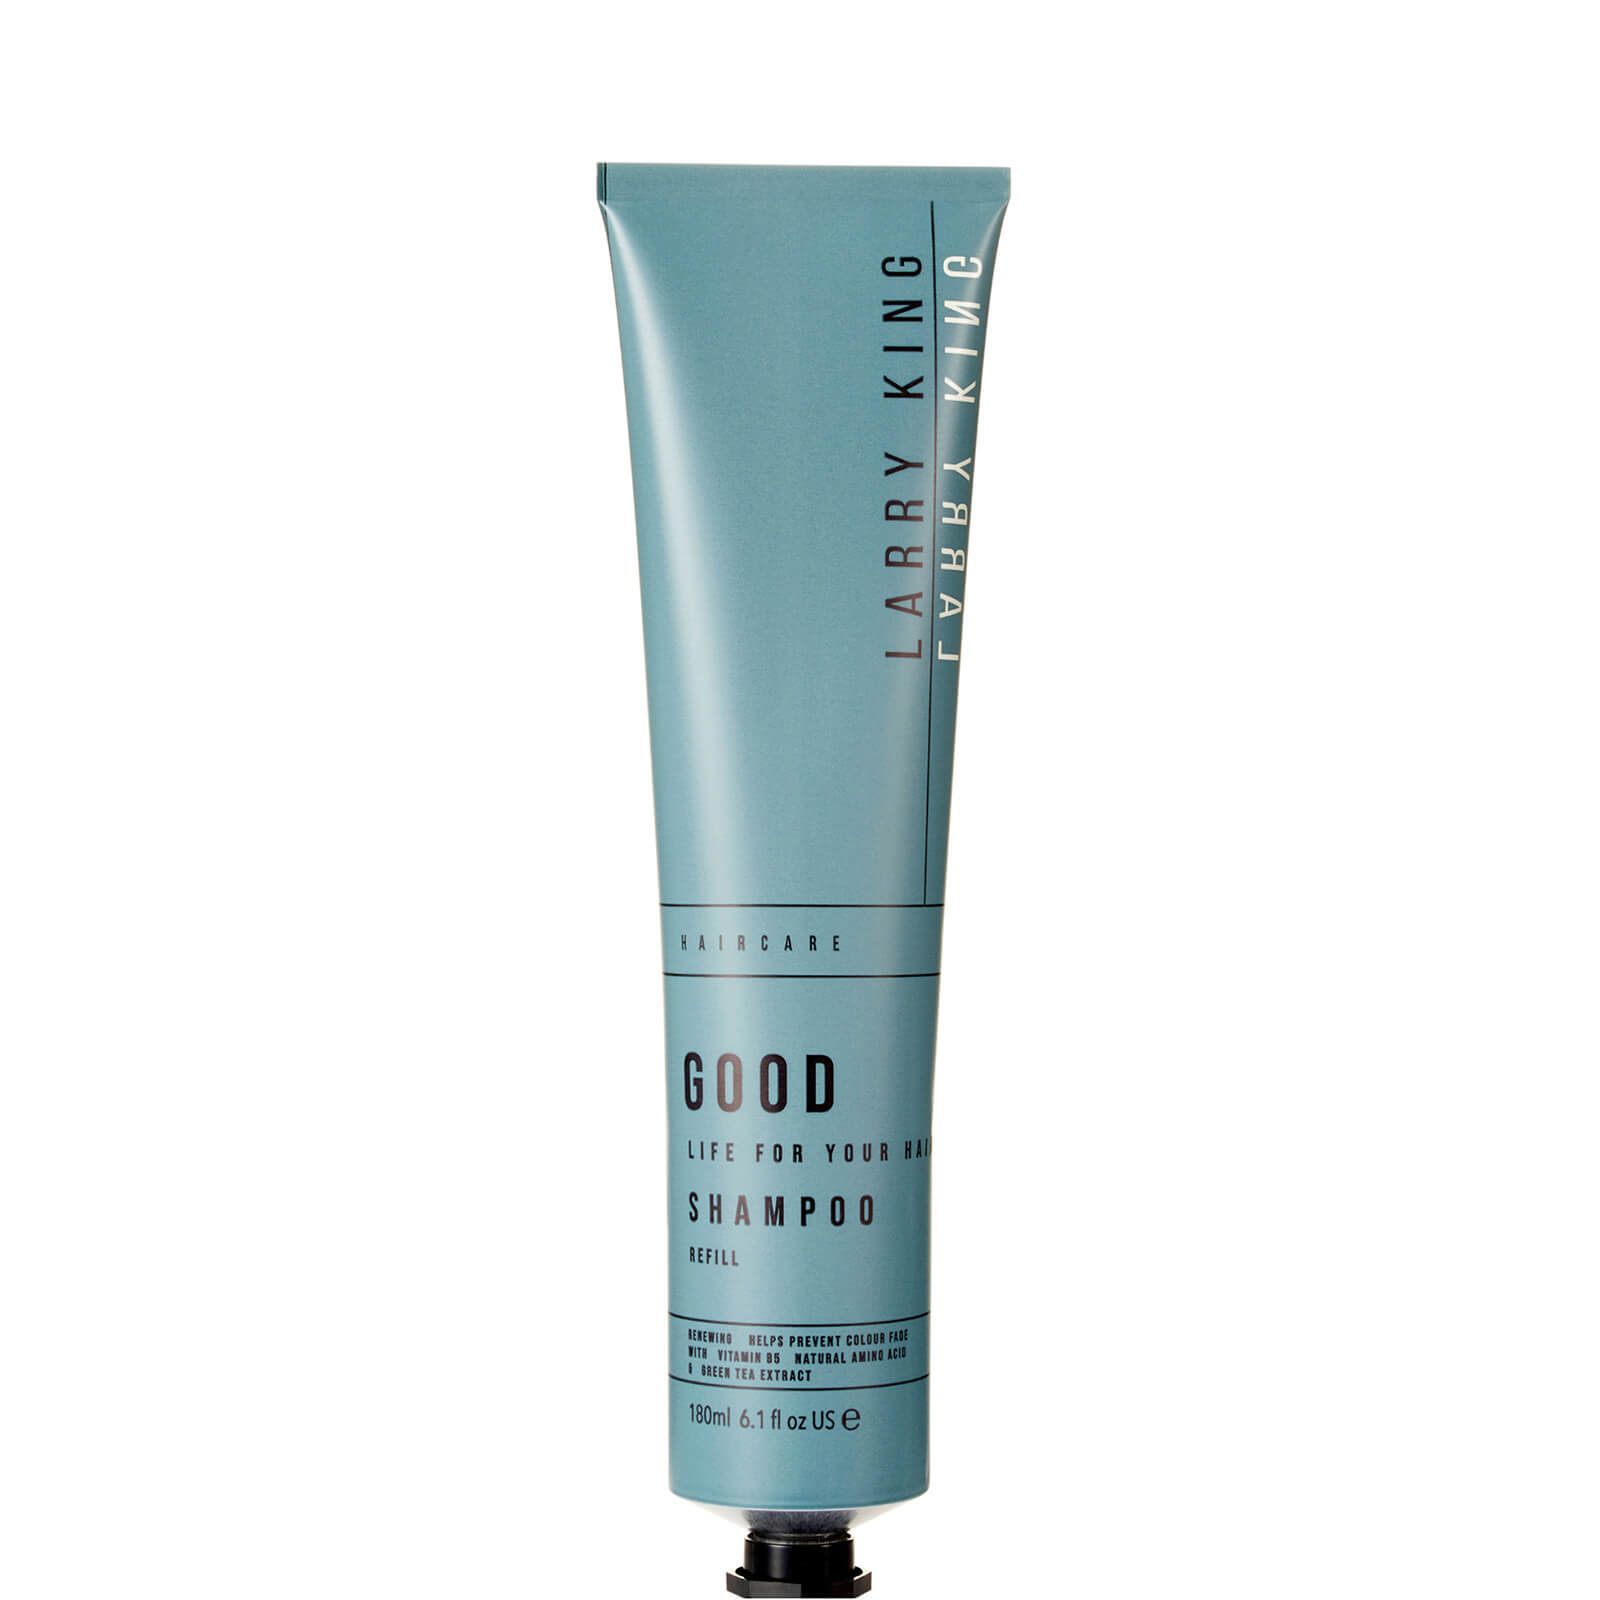 Larry King Hair Care Good Life Shampoo - 180ml Refill | Cult Beauty (Global)